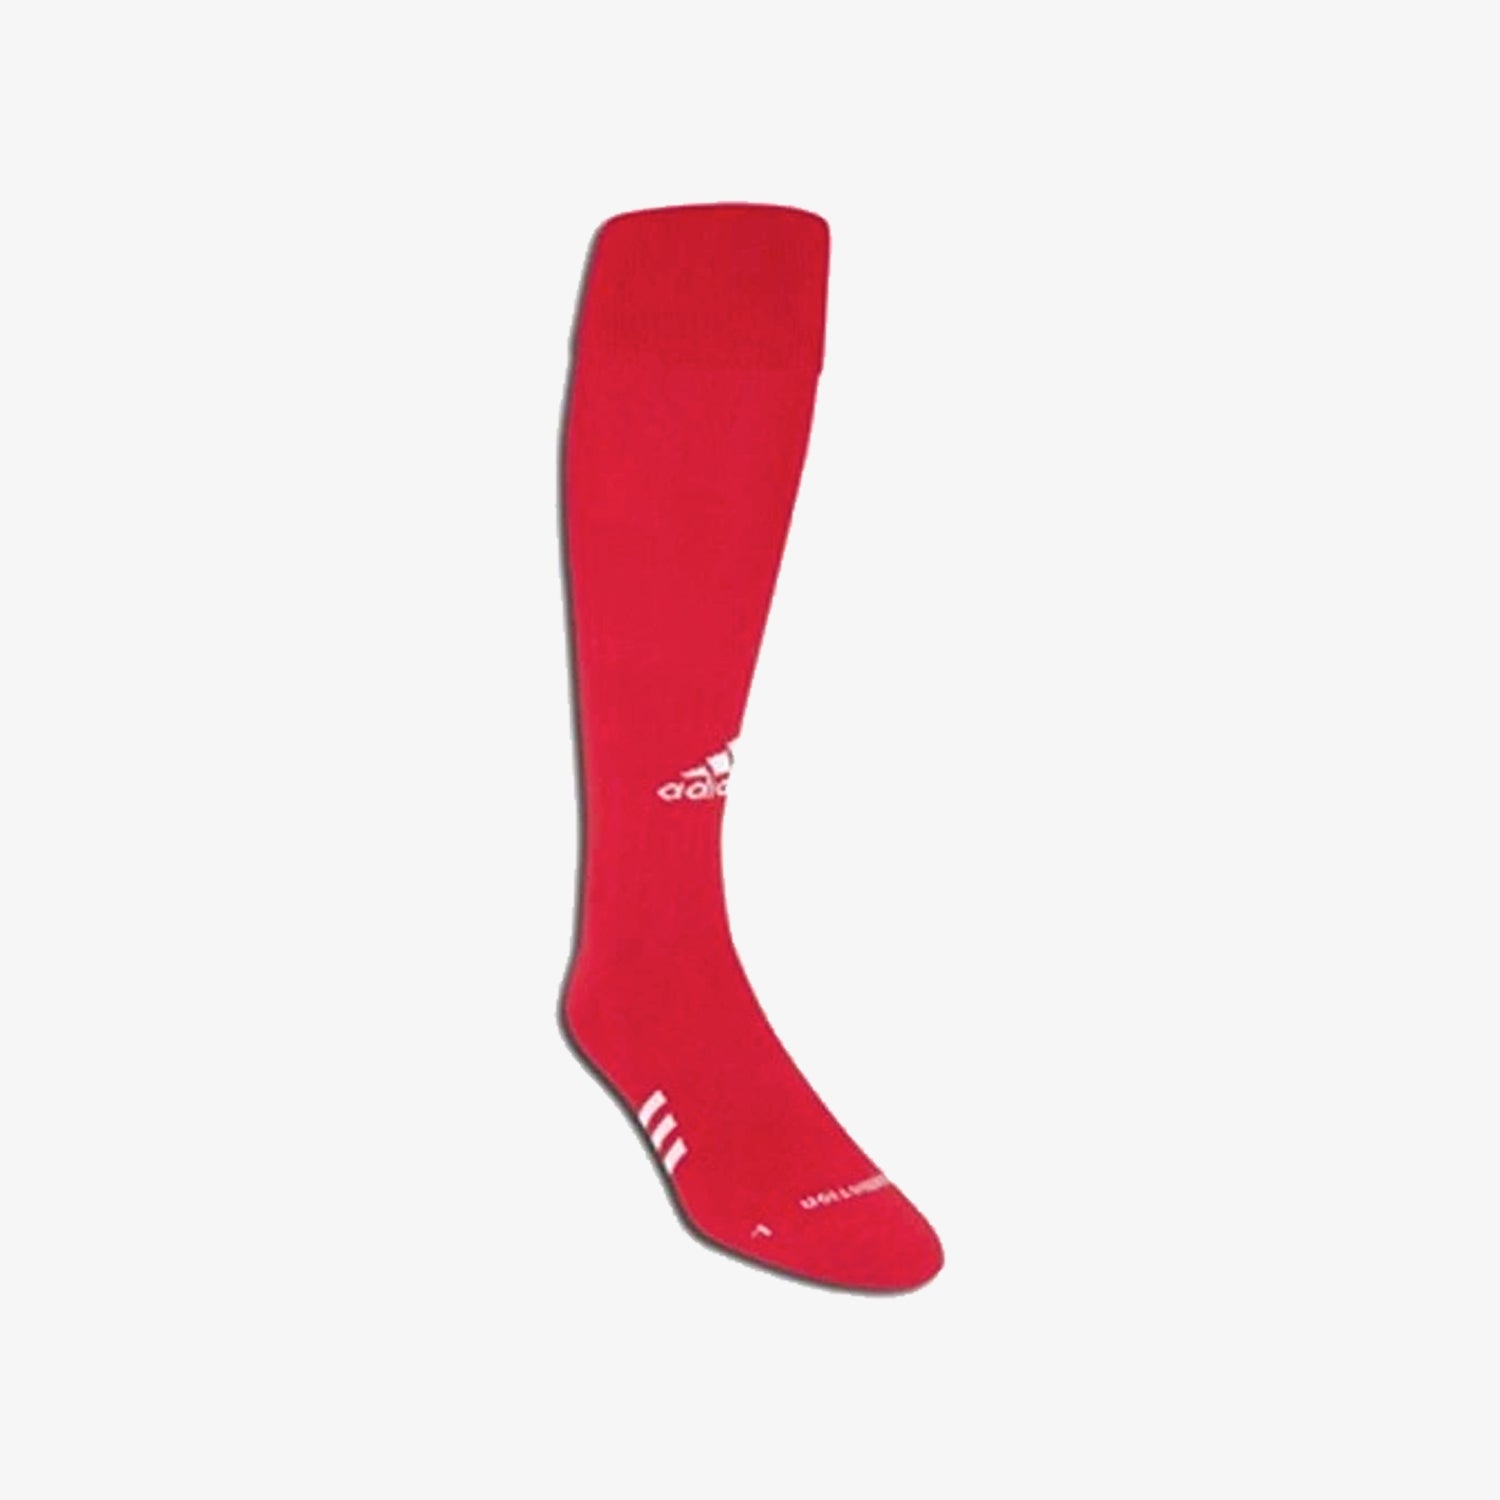 Ncaa Formotion Elite Soccer Sock Large - Red